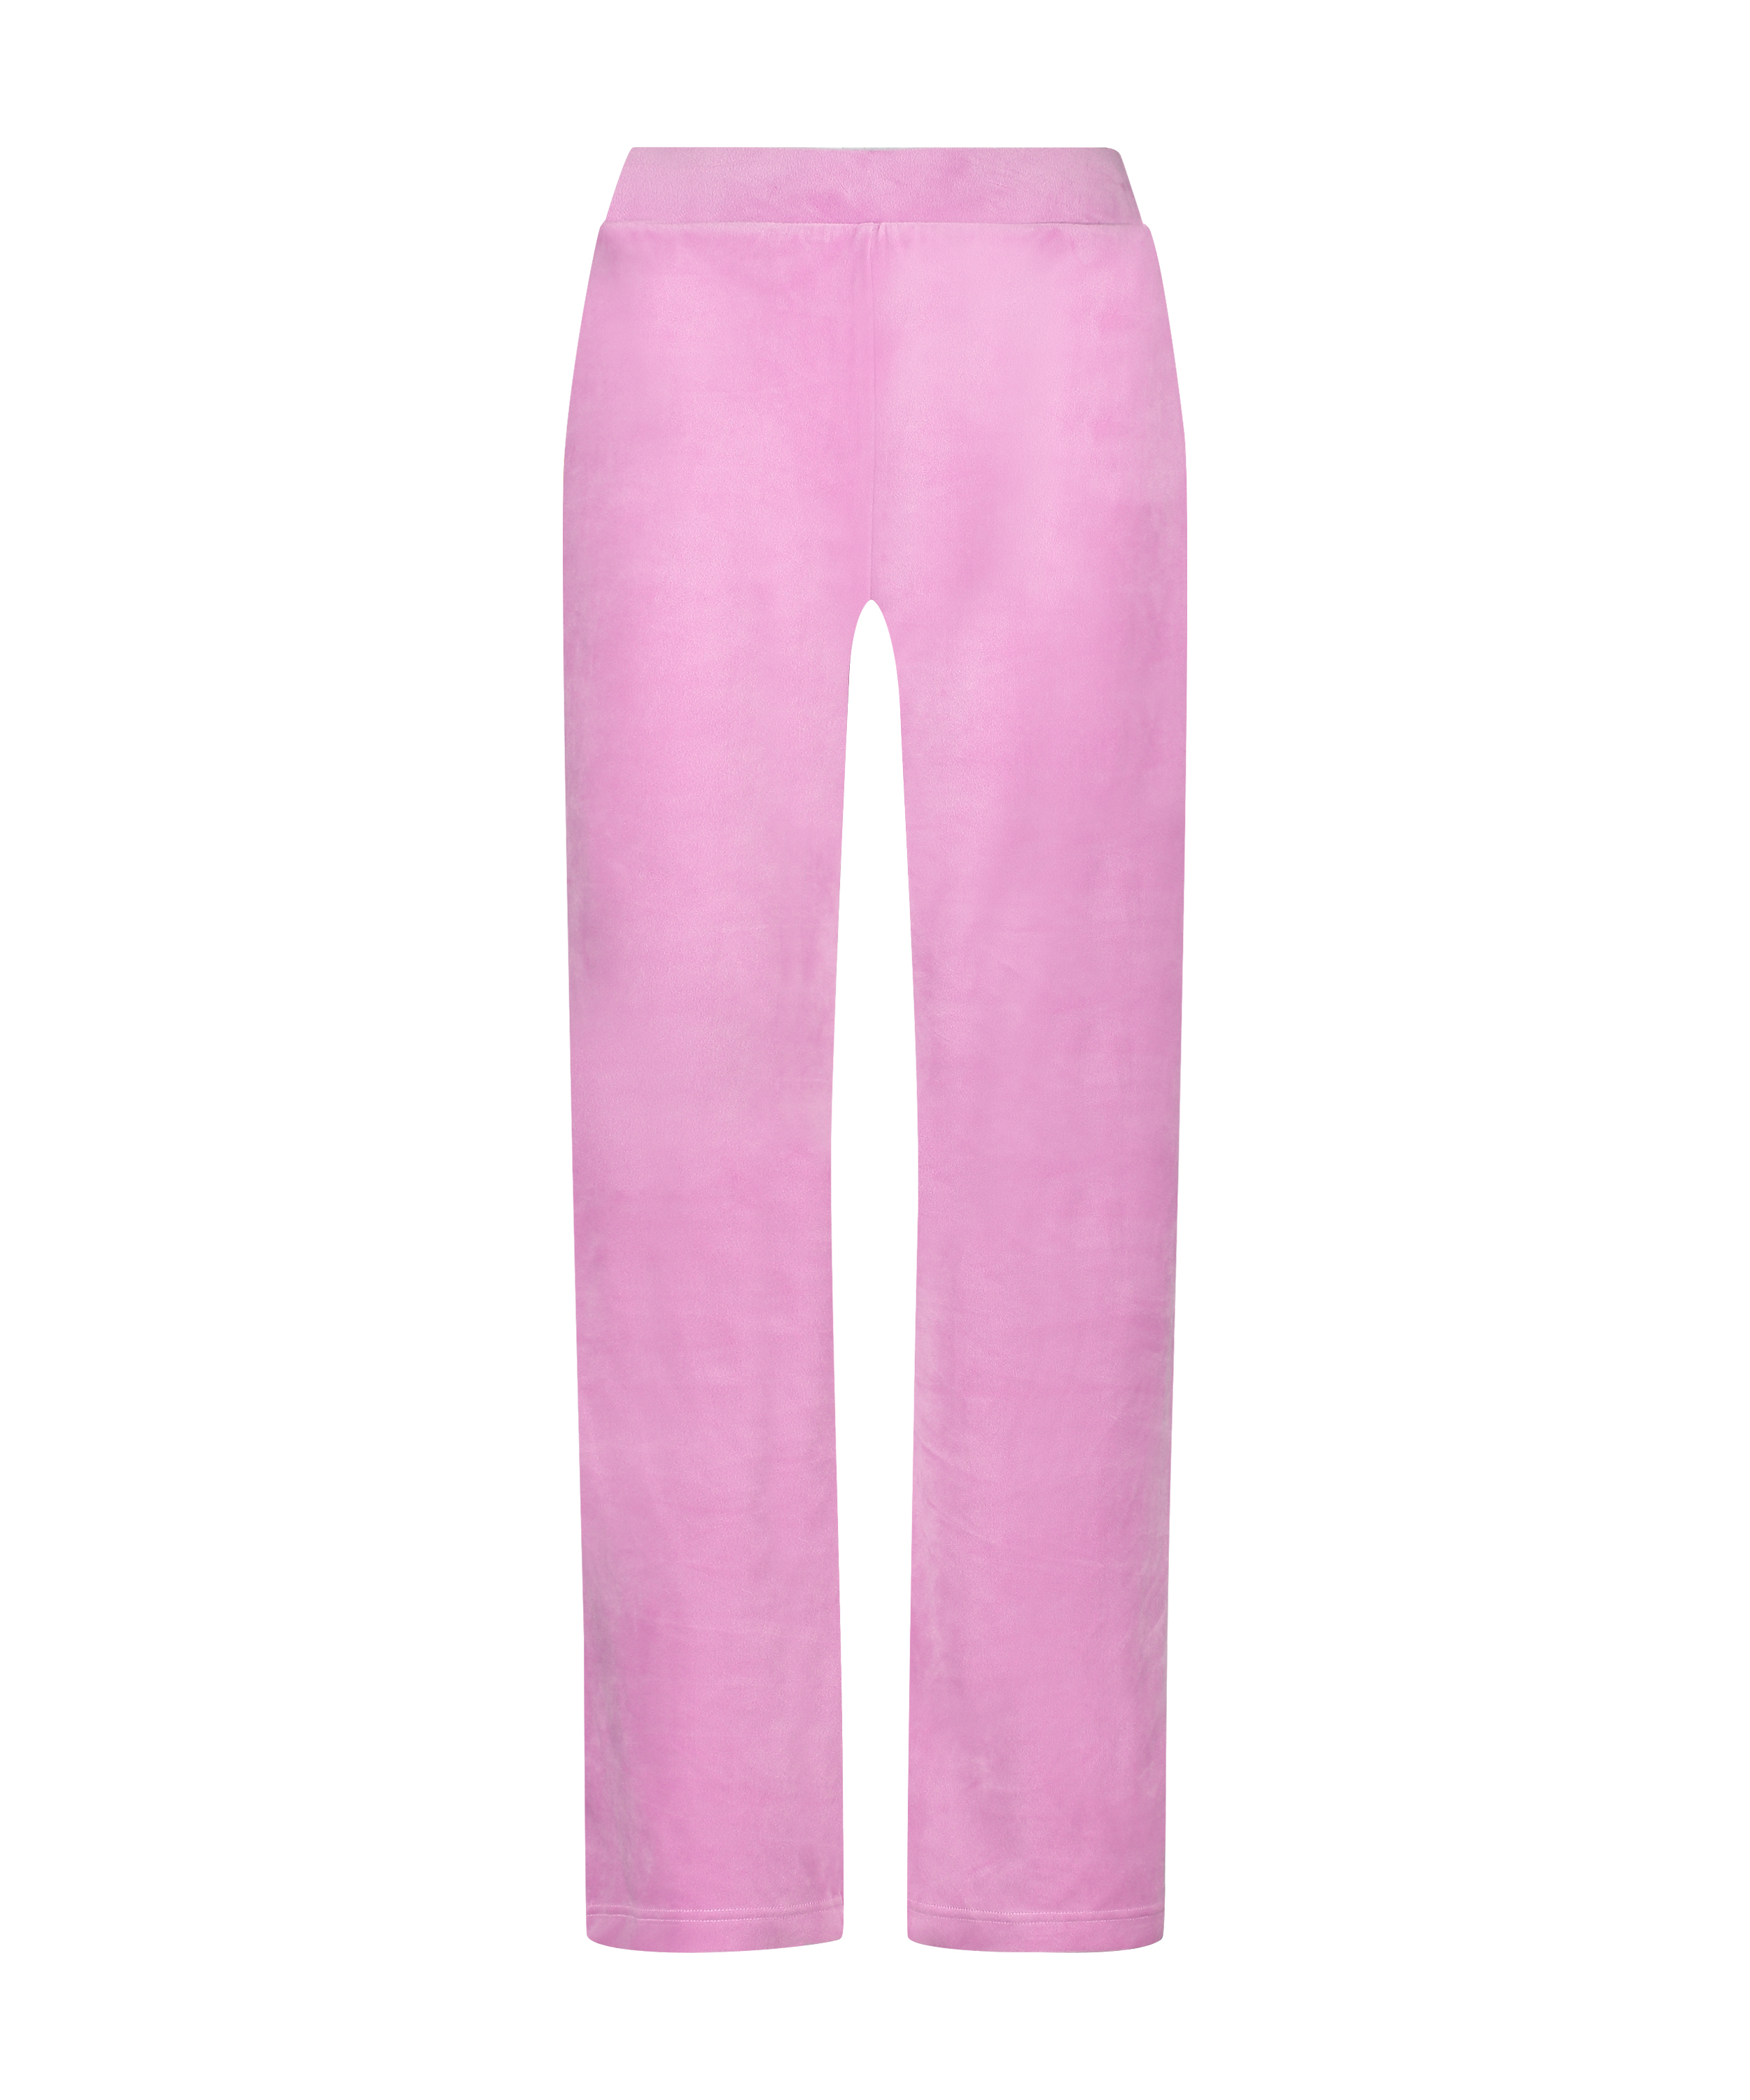 Tall Pyjamasbukser velour, pink, main